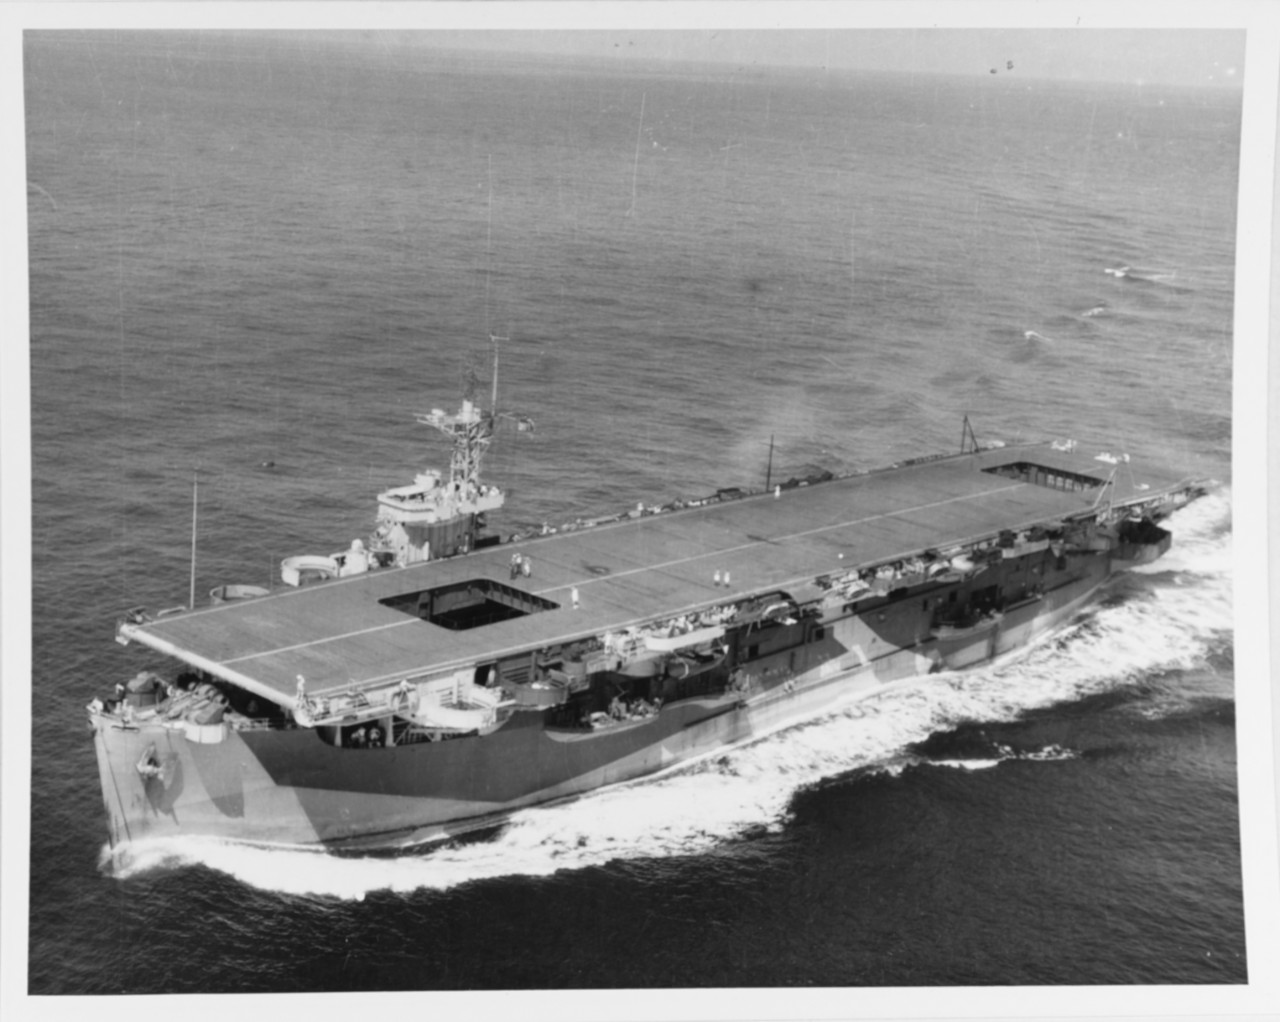 HMS REAPER (British escort carrier, 1943, ex-USS WINJAH)